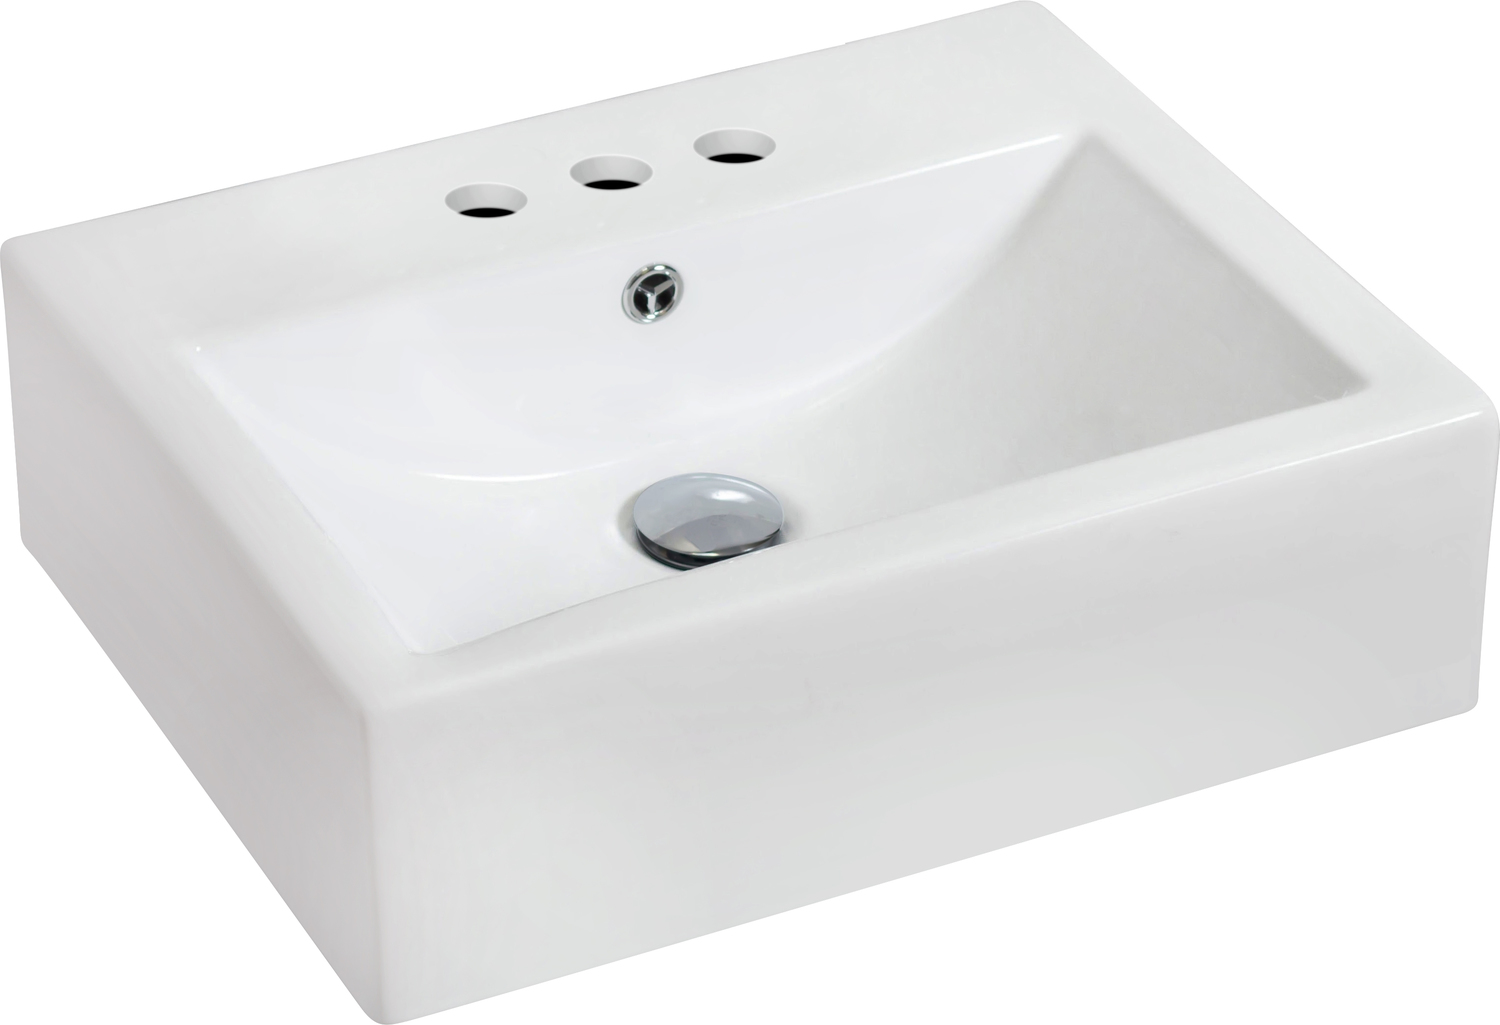  American Imaginations Vessel Set Bathroom Vanity Sinks White Transitional